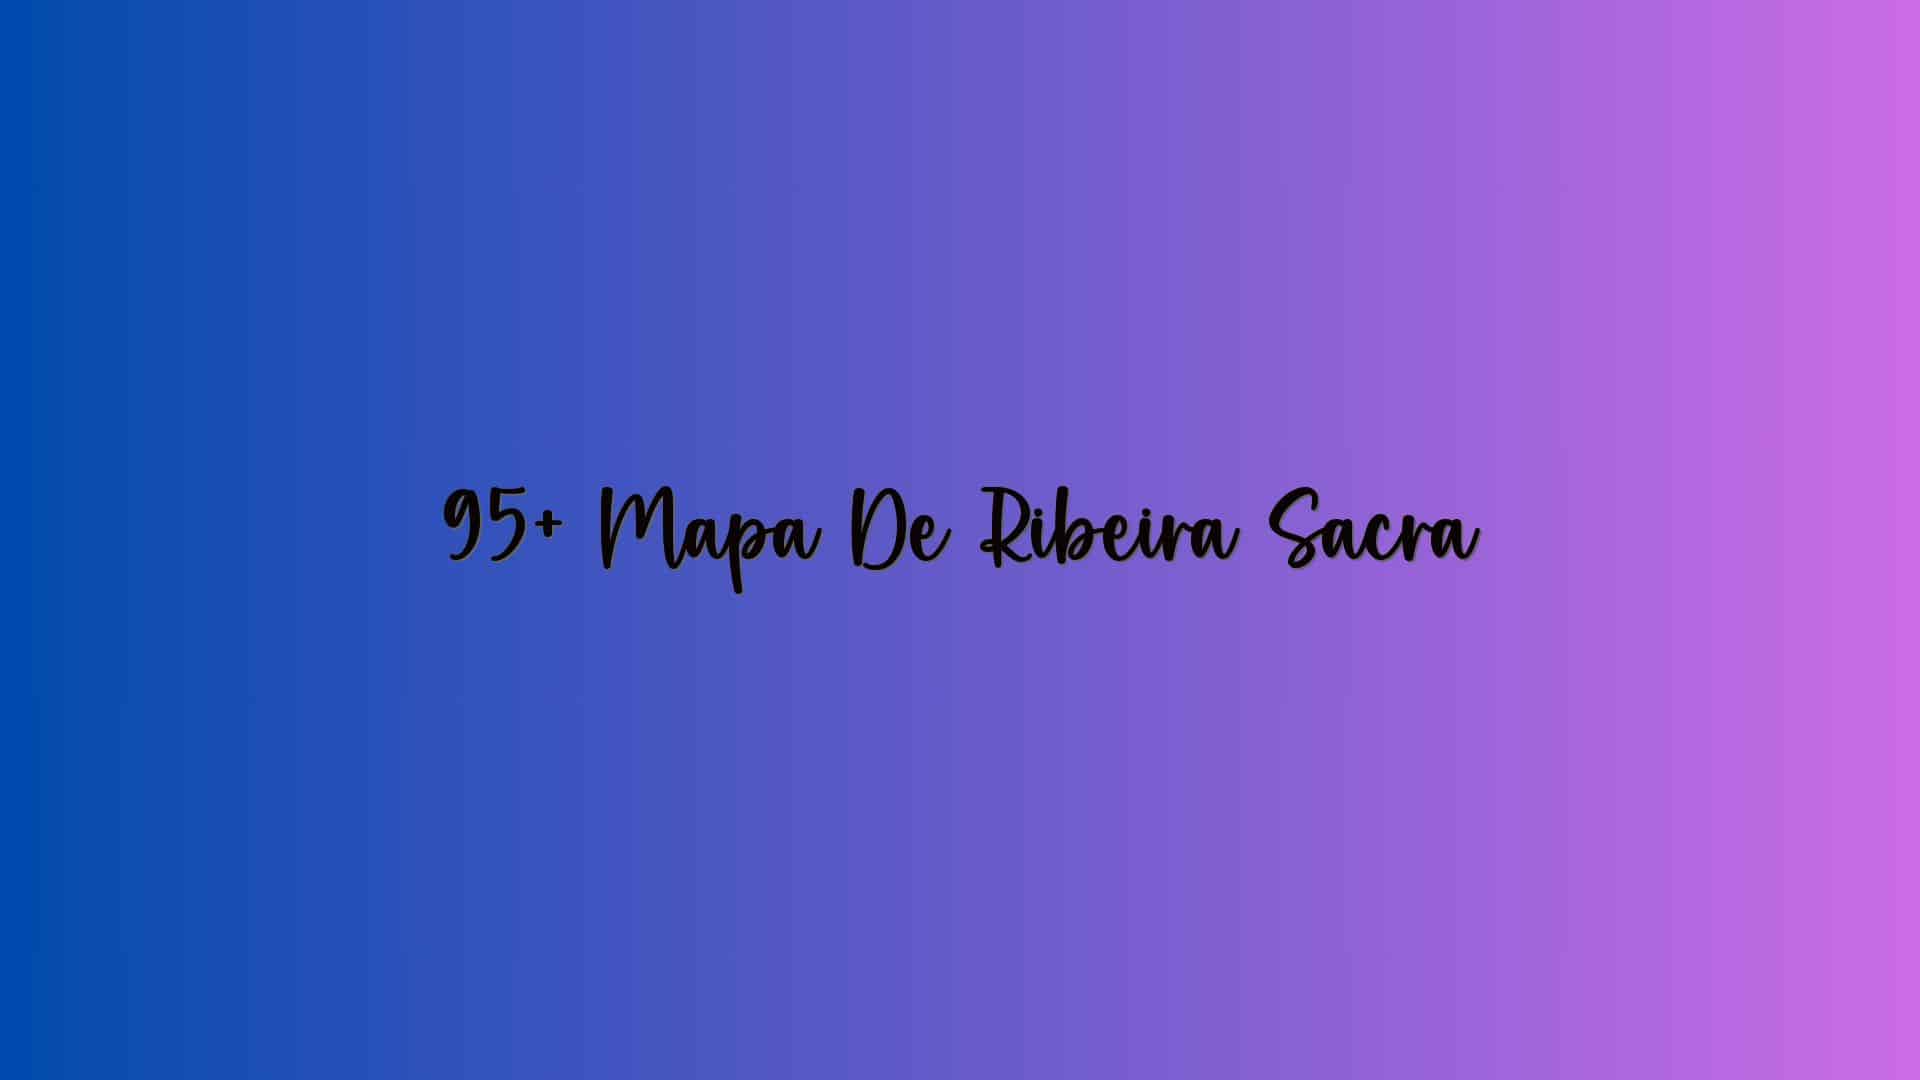 95+ Mapa De Ribeira Sacra